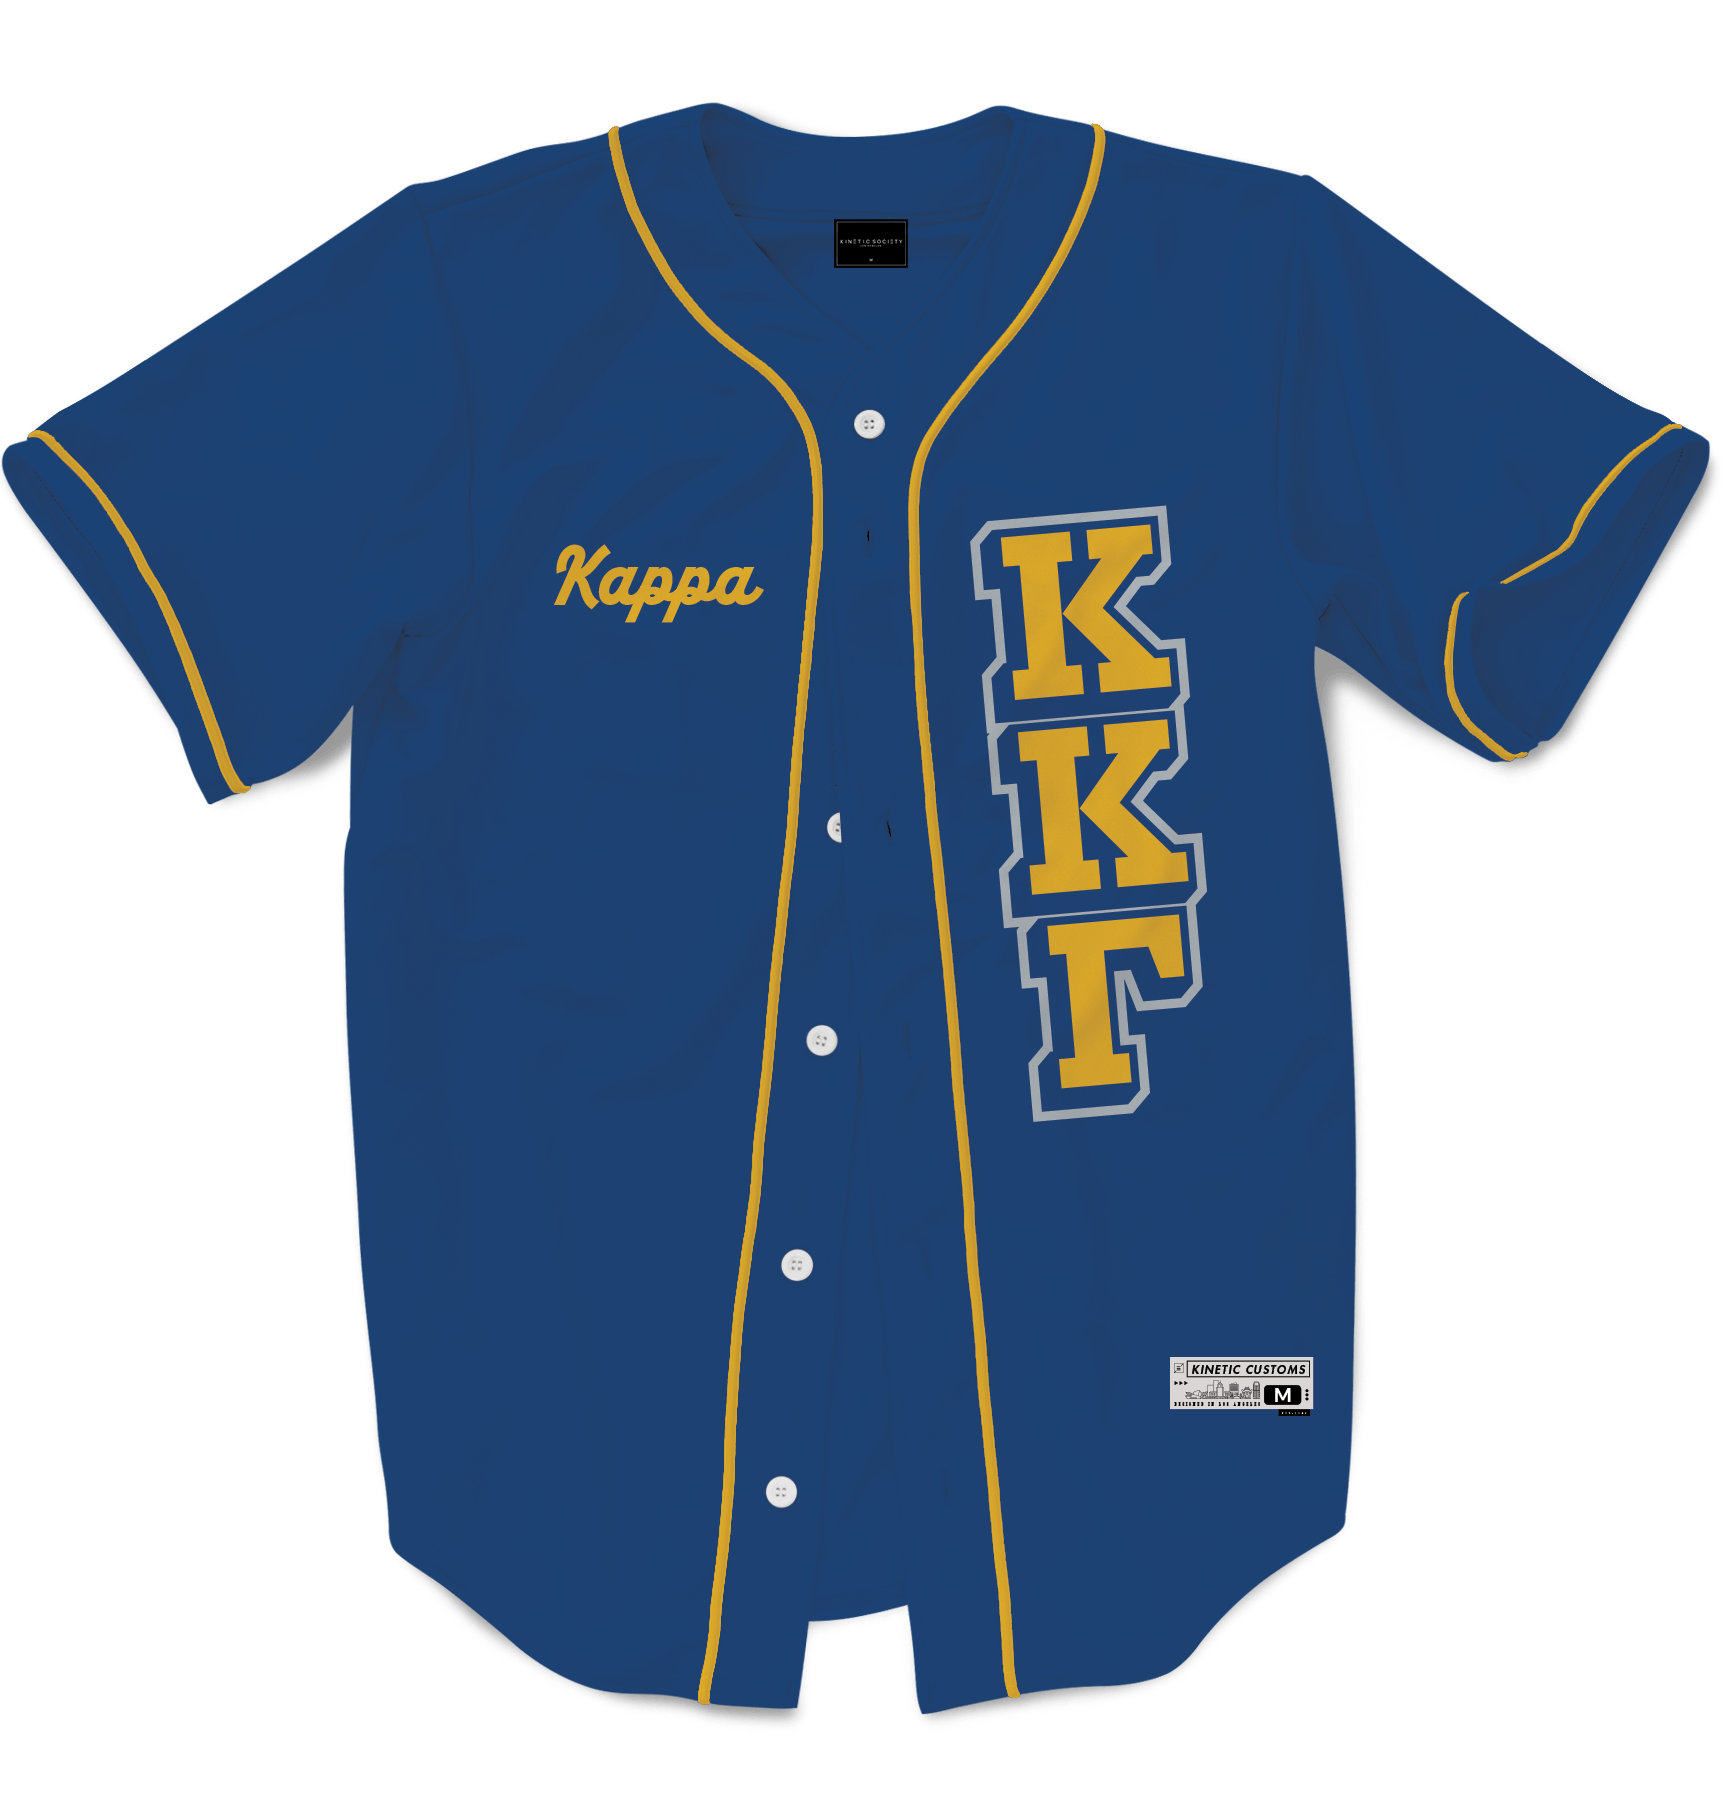 Kappa Kappa Gamma - The Block Baseball Jersey Premium Baseball Kinetic Society LLC 